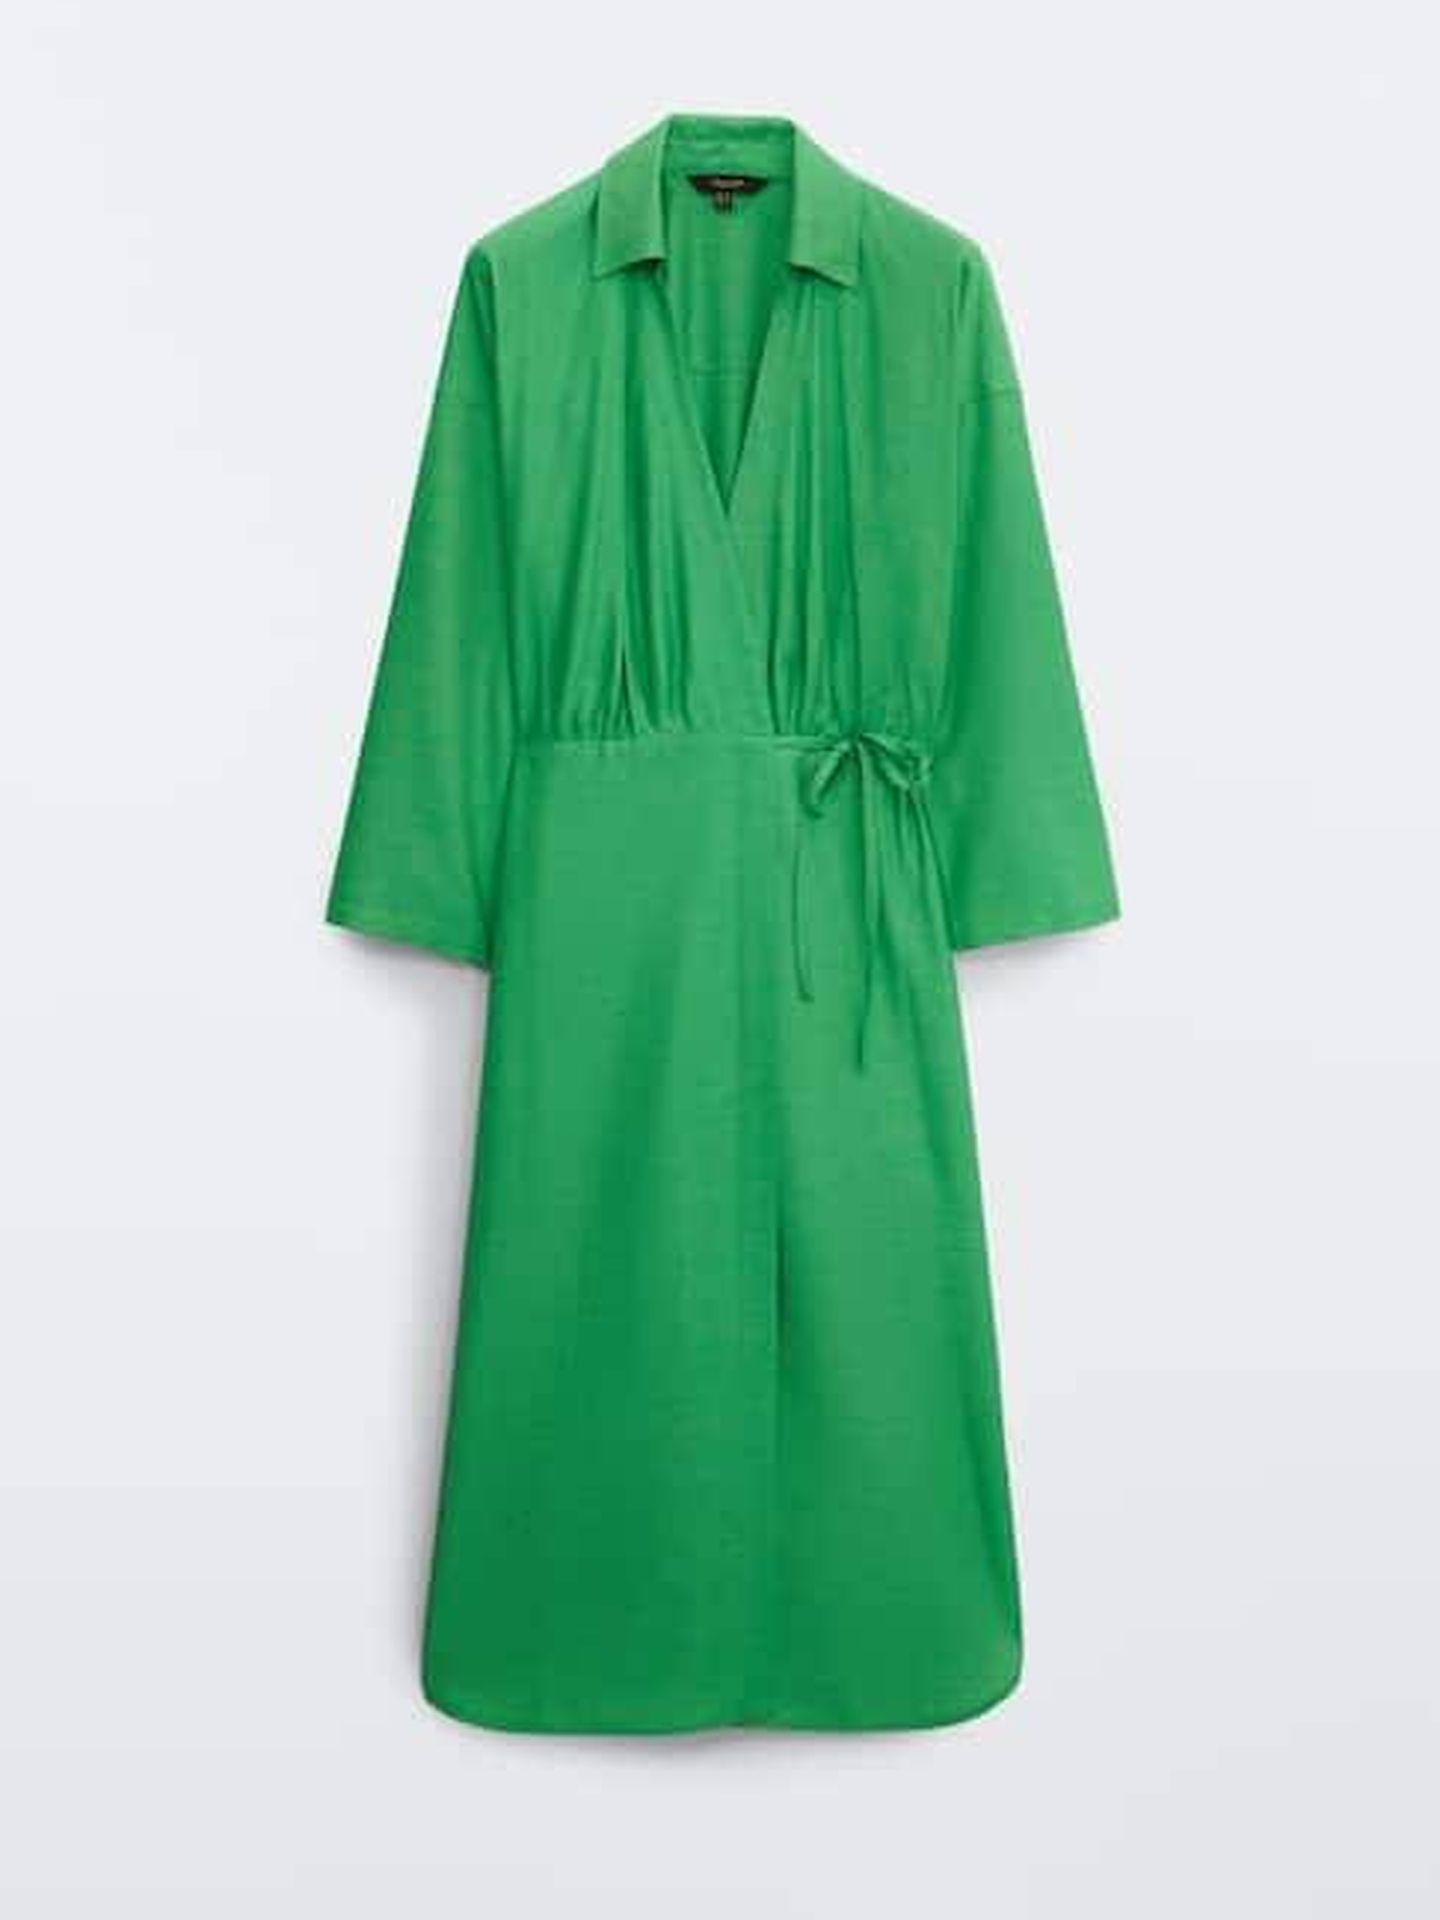 Vestido verde de Massimo Dutti. (Cortesía)